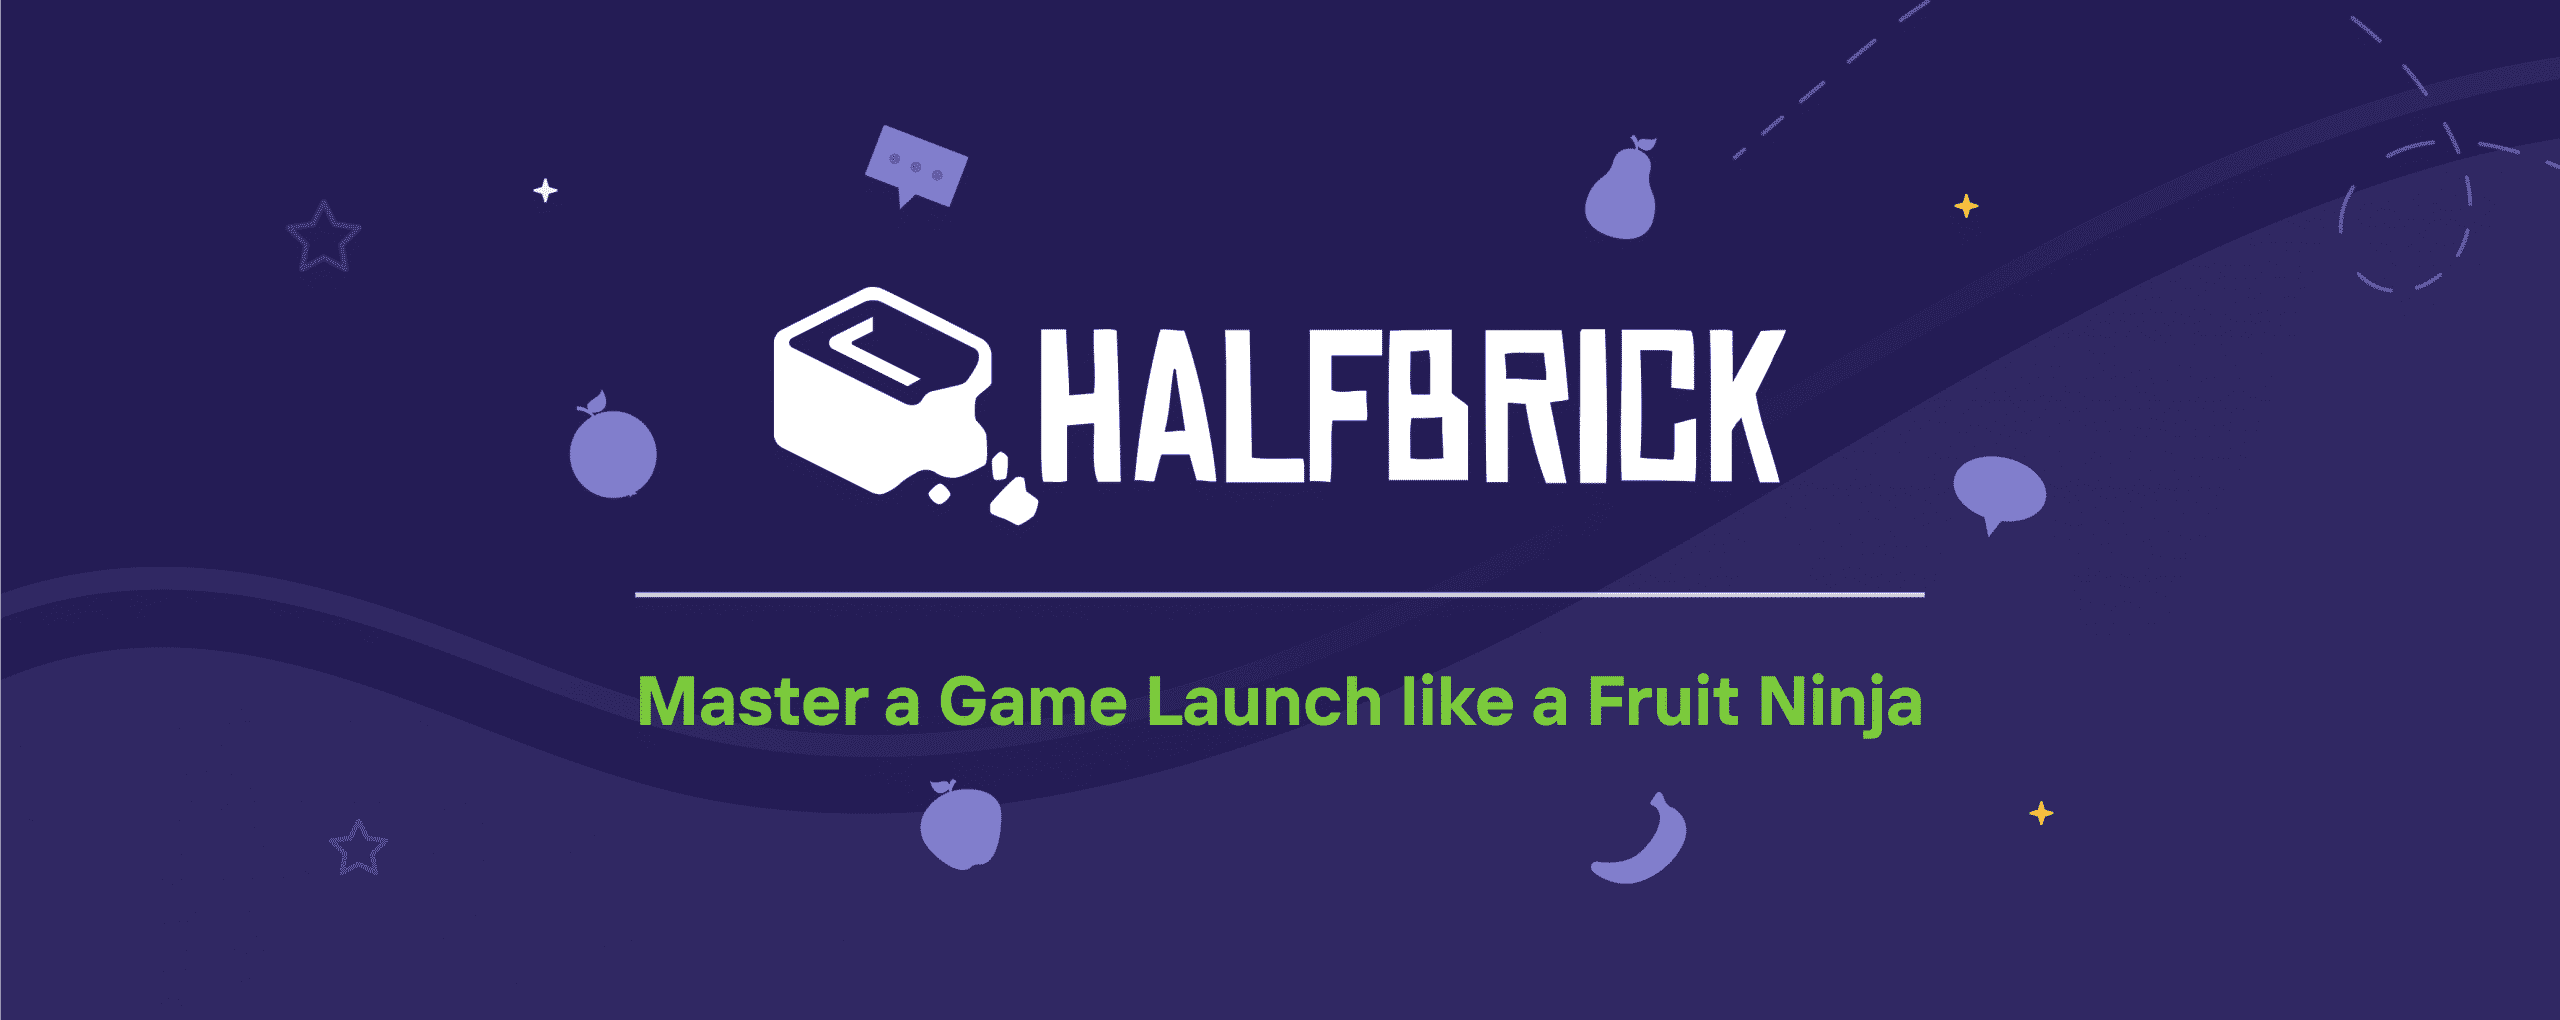 Master a Game Launch Like a Fruit Ninja